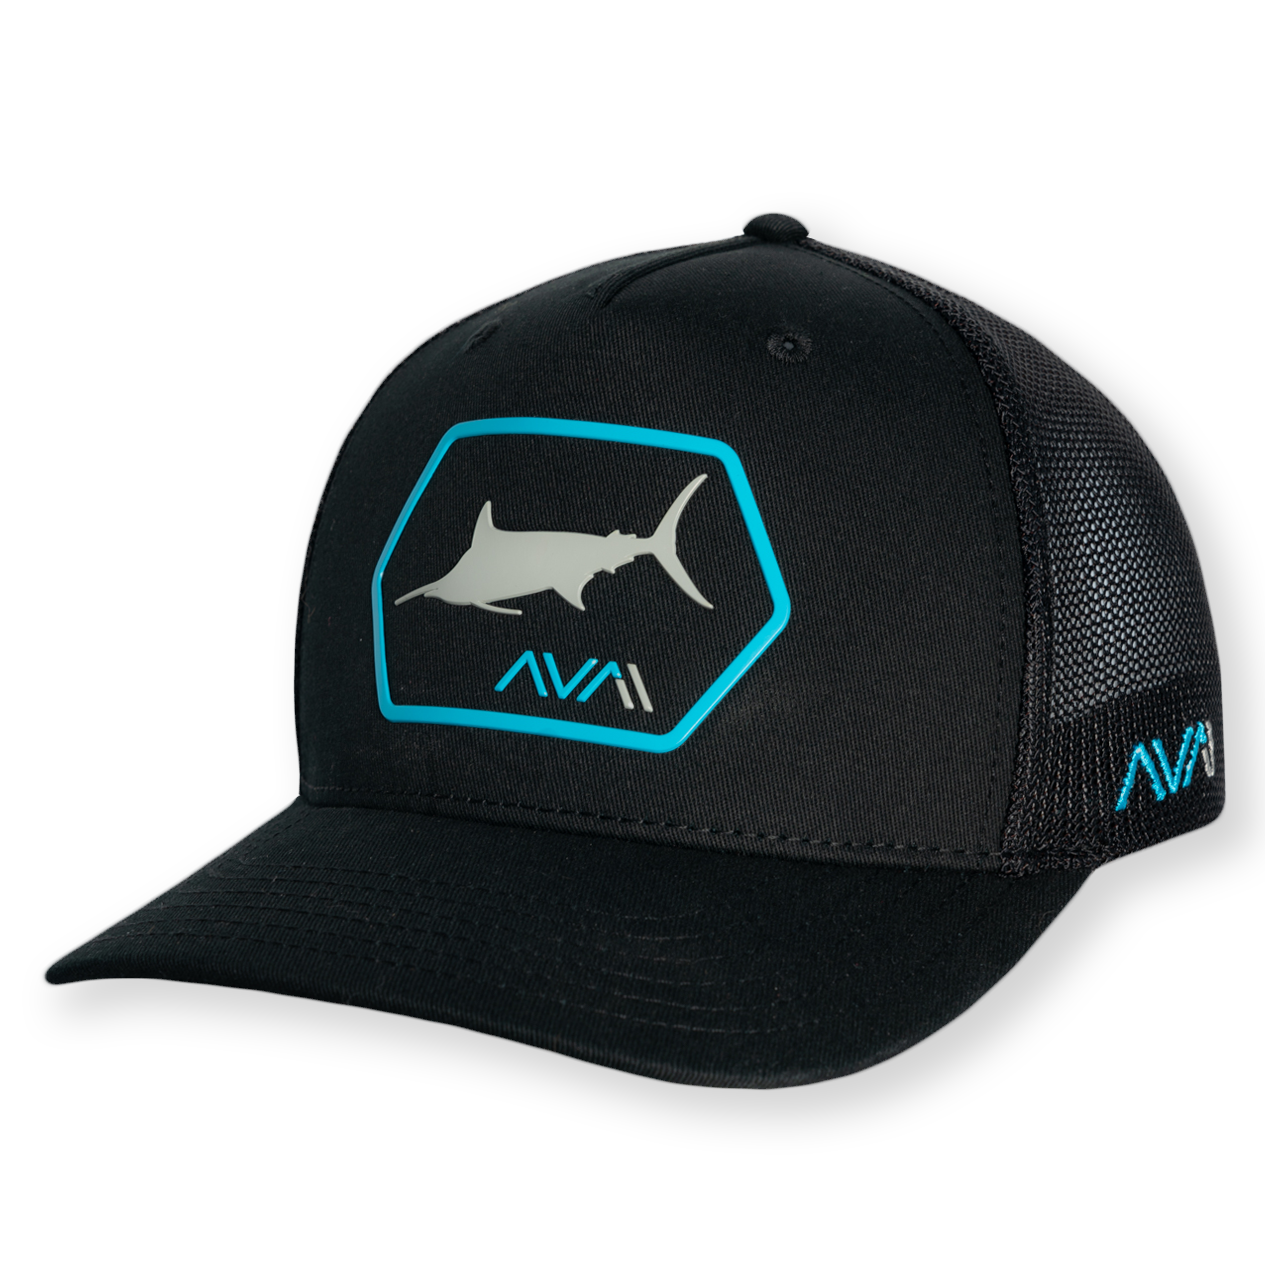 Marlin - Trucker Style Snap Back Hat Black